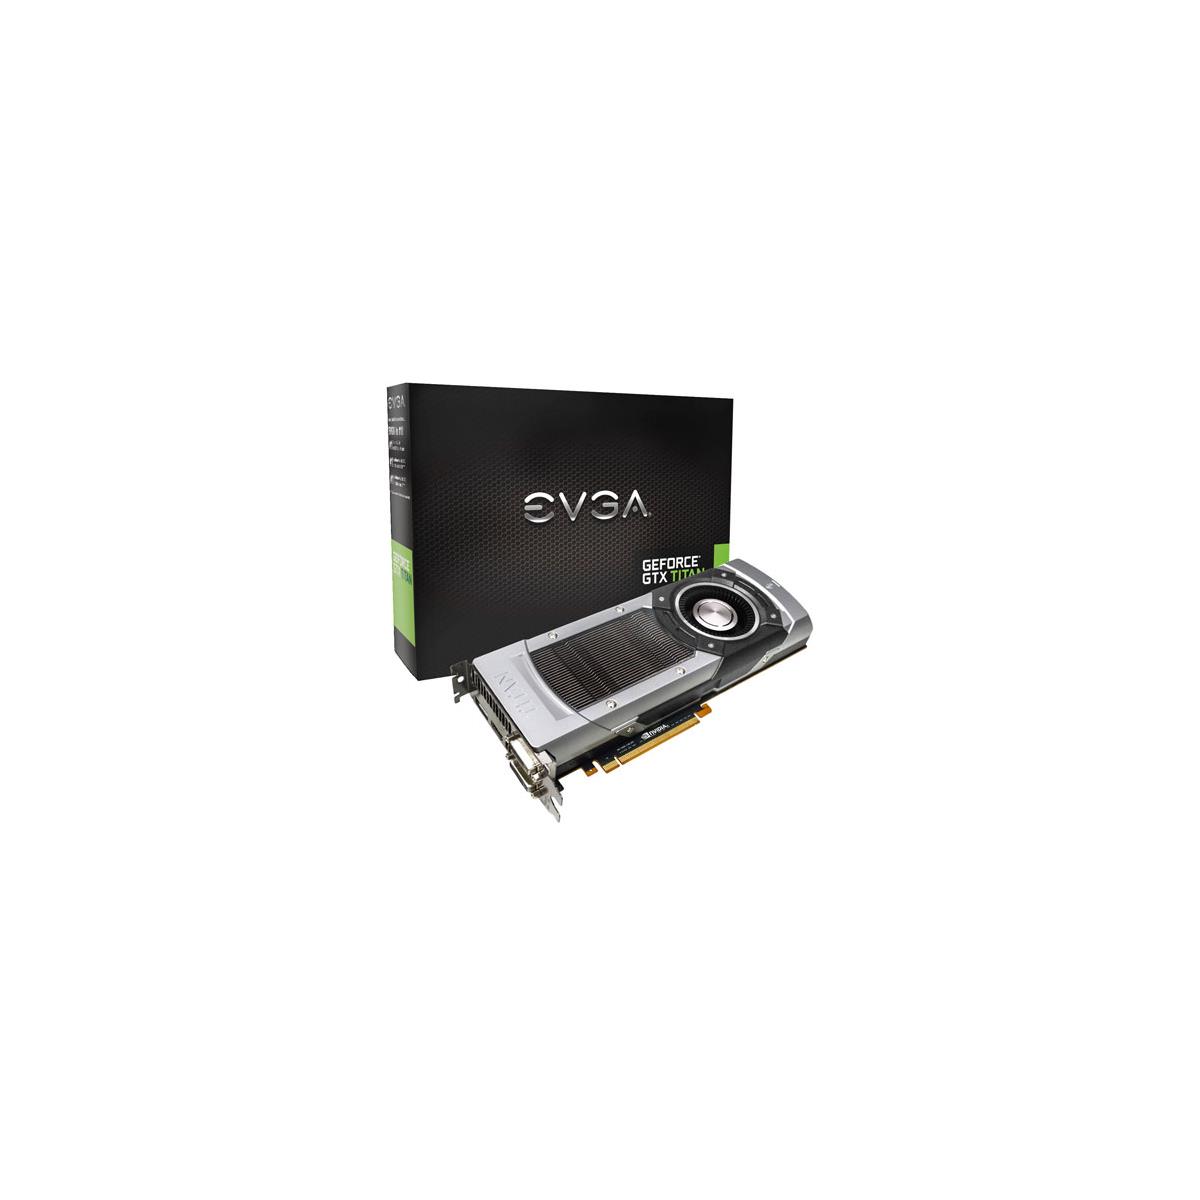 Image of EVO EVGA GeForce GTX Titan Graphics Card